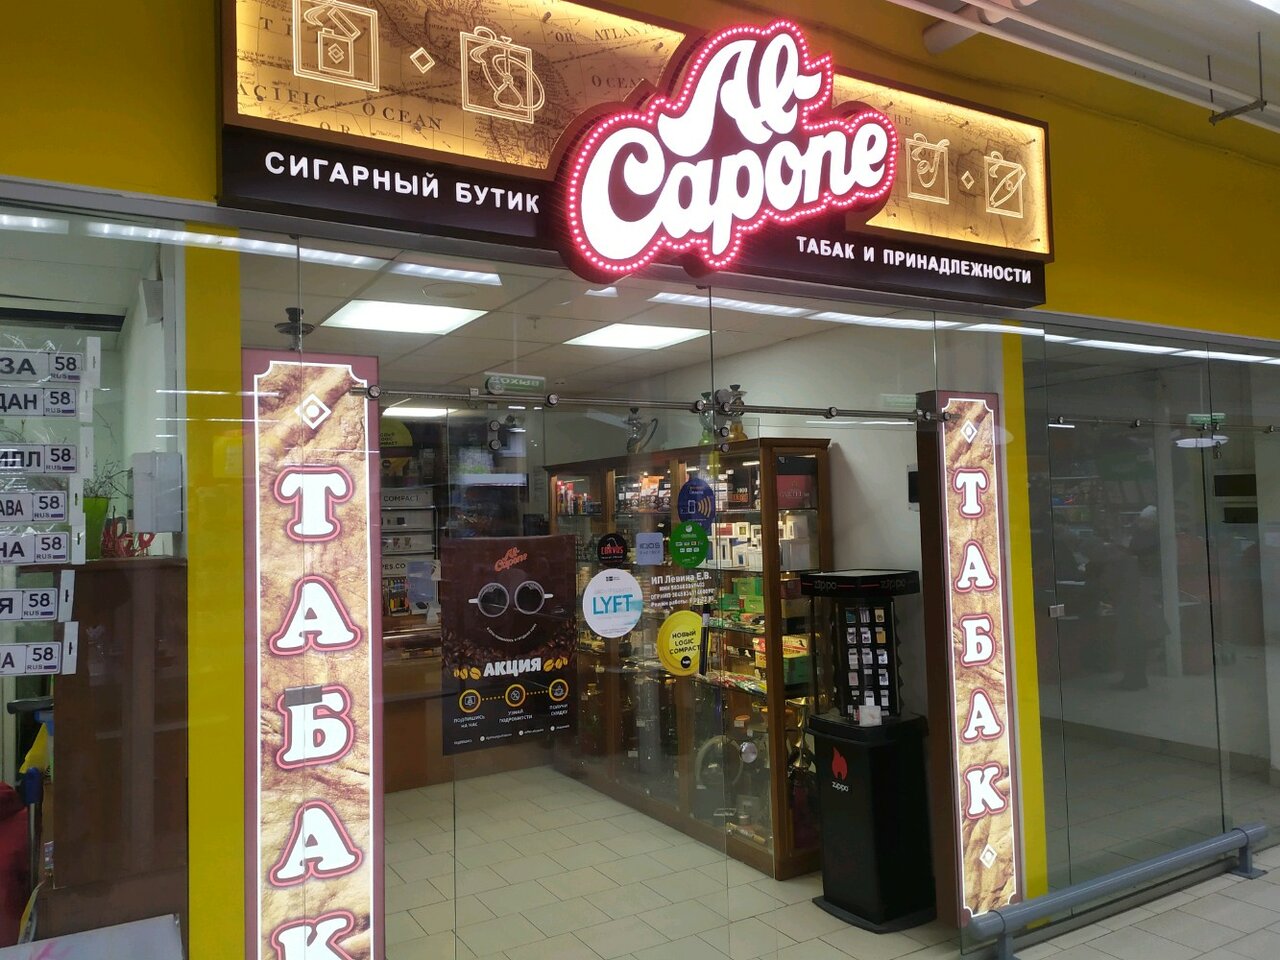 Аль Капоне Магазин Табака